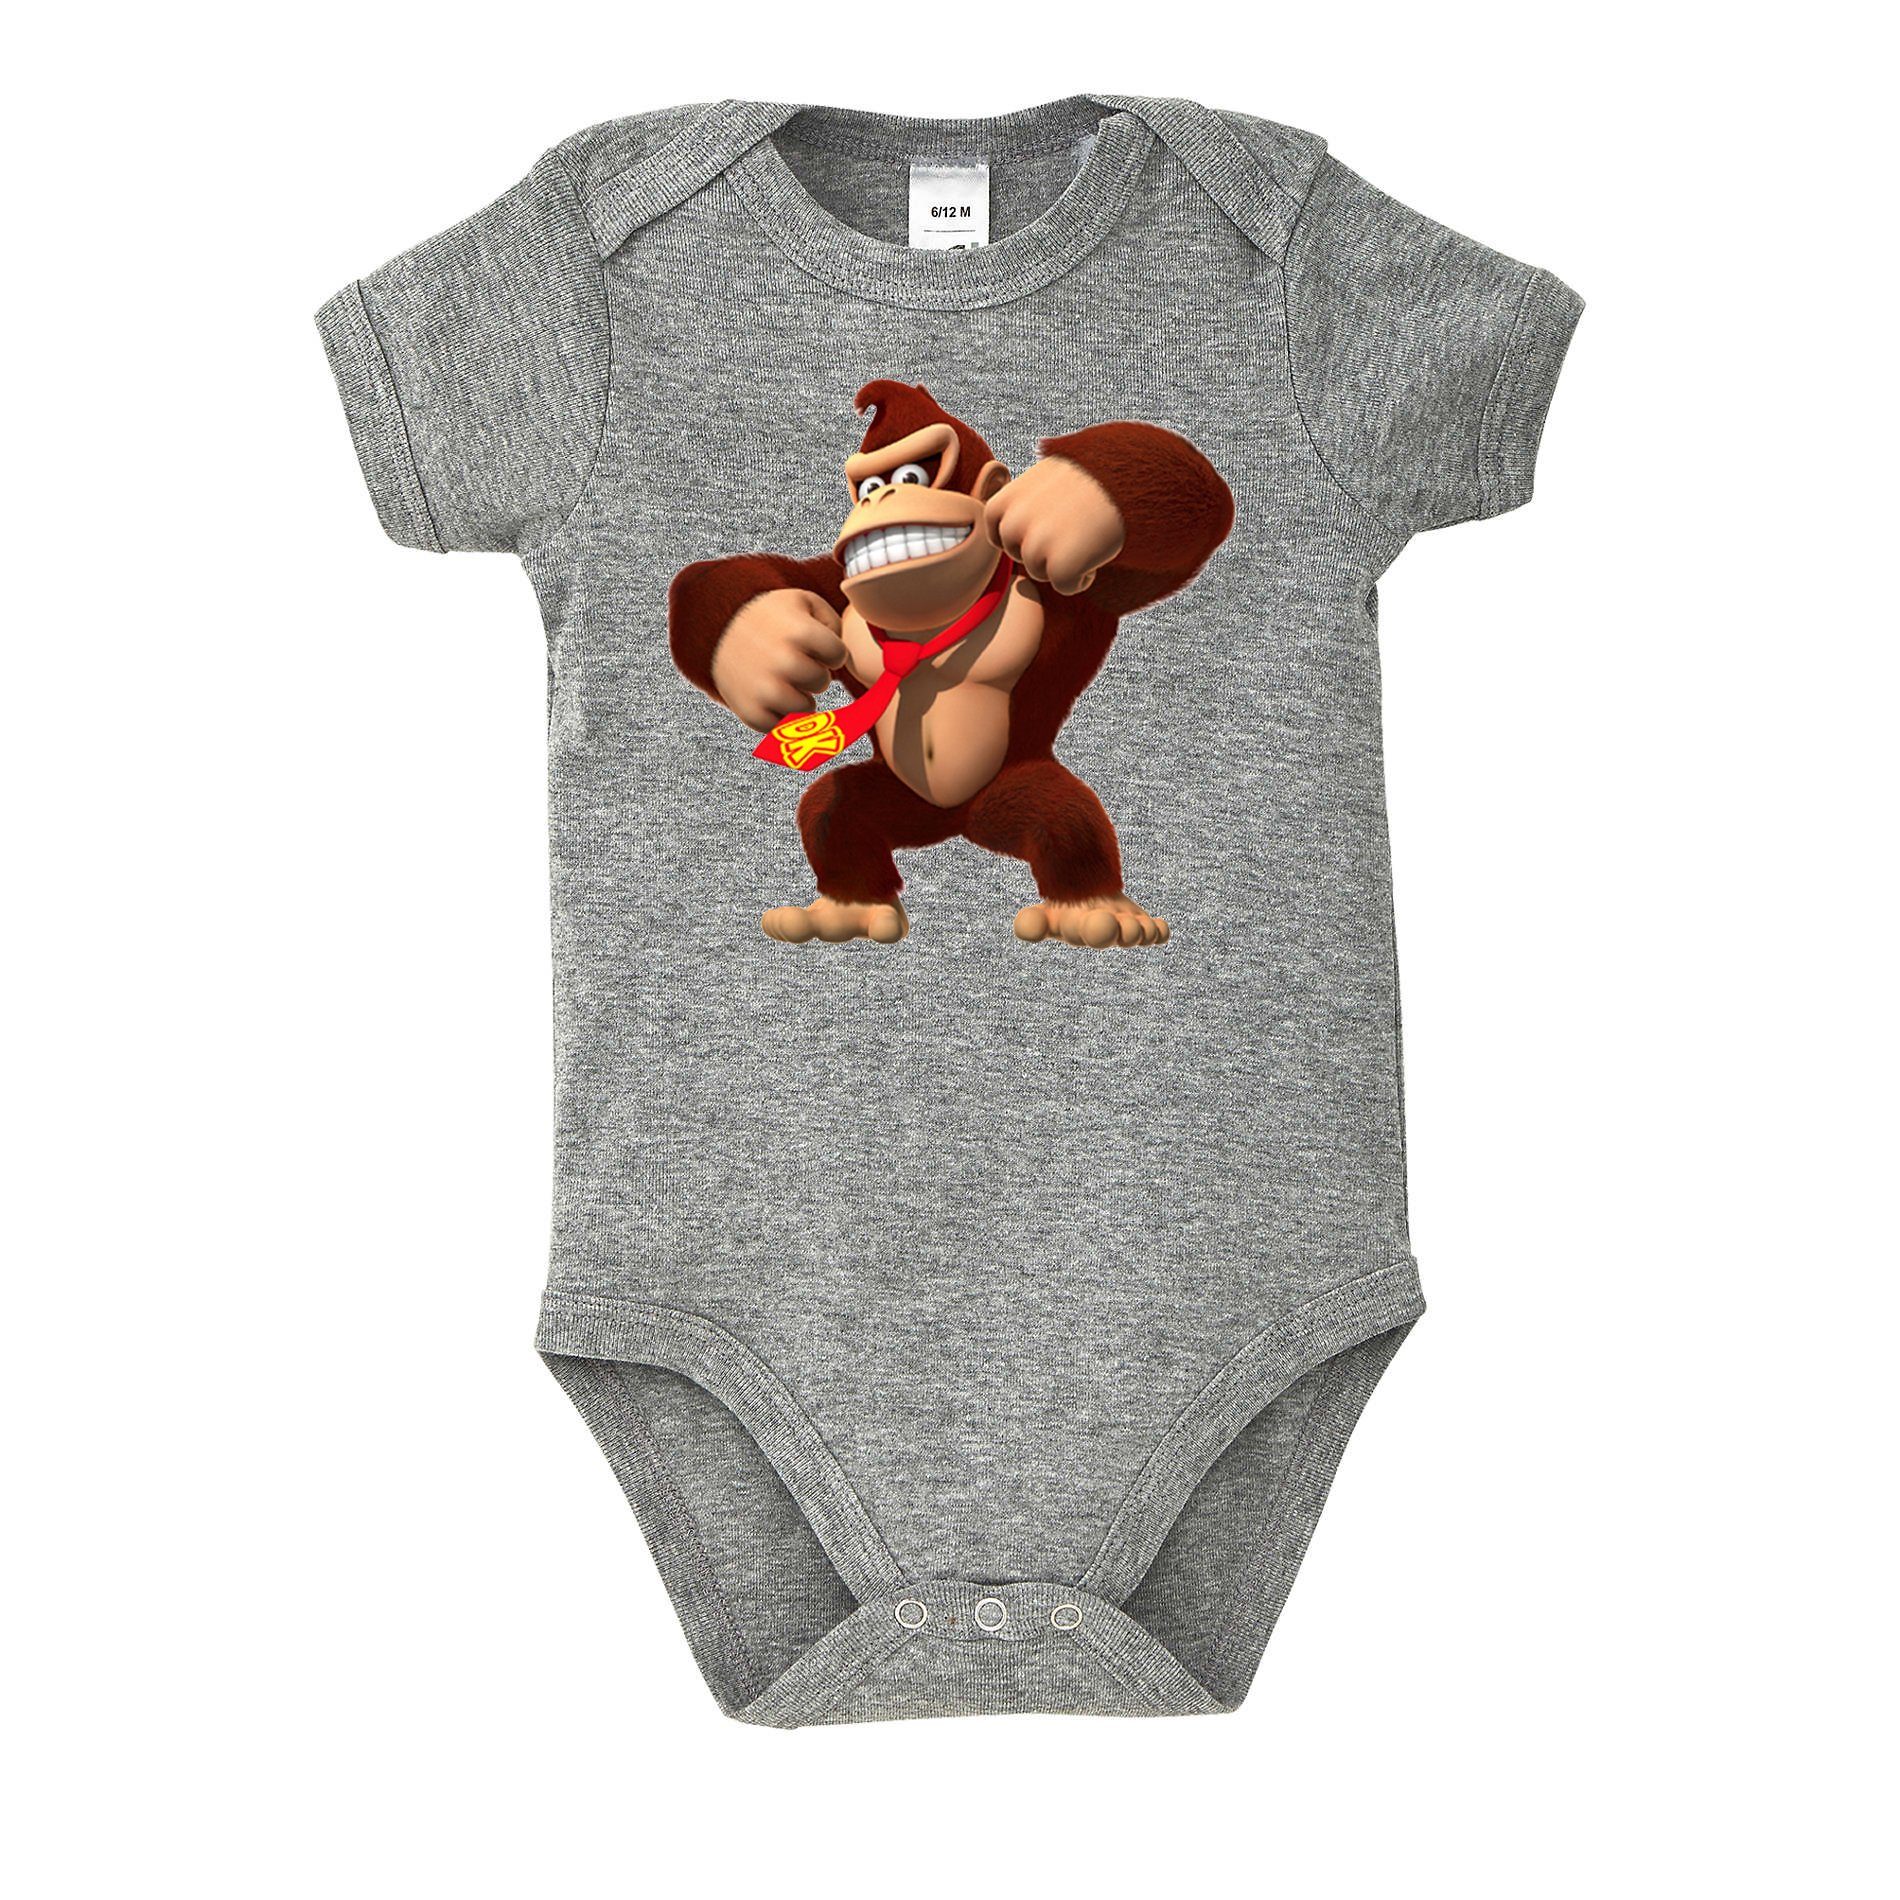 Blondie & Brownie Strampler Kinder Baby Donkey Kong Gorilla Affe Nintendo mit Druckknopf Grau